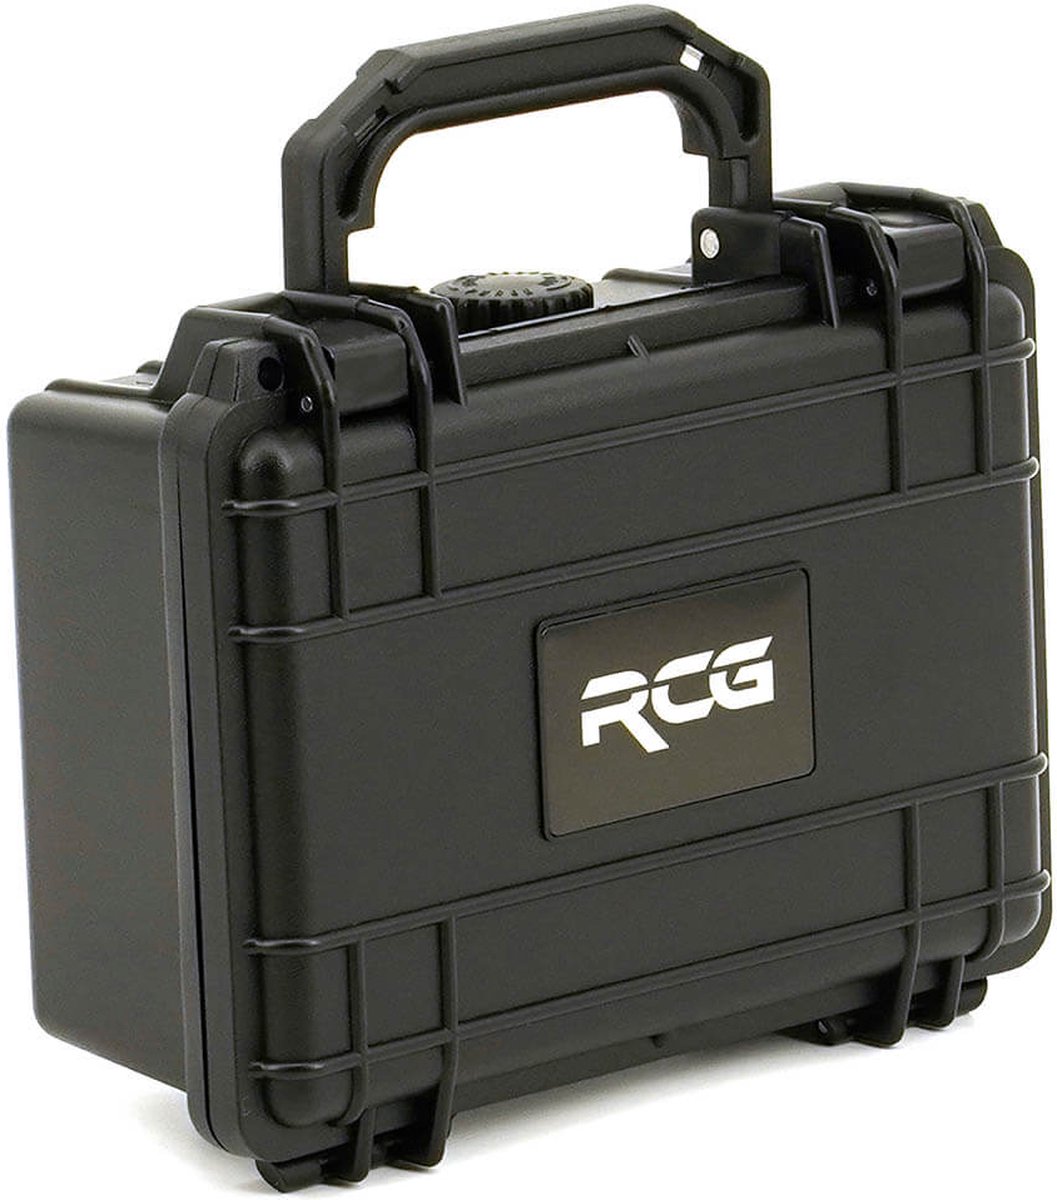 RCG Hardcase - S